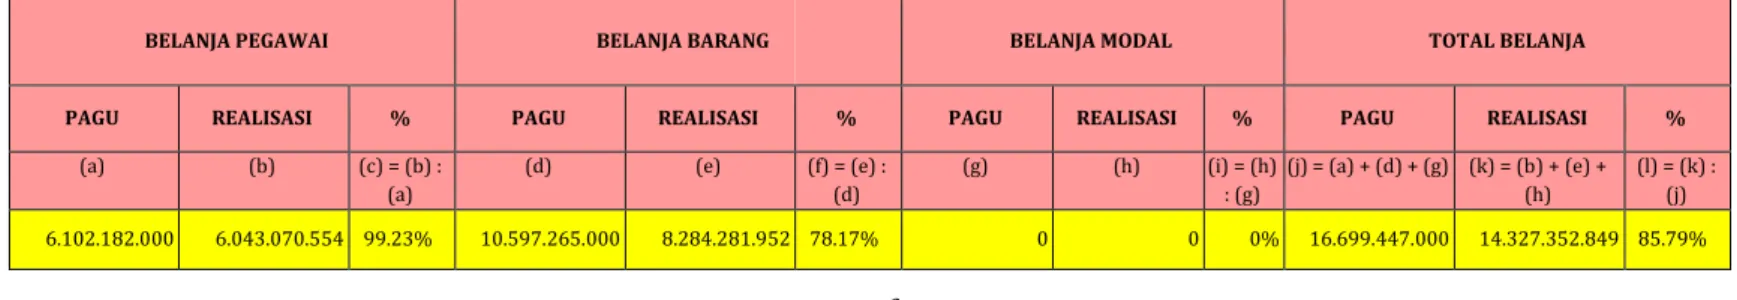 Tabel Realisasi Anggaran Belanja 1 Januari s.d 31 Desember Tahun 2020   Kantor Imigrasi Kelas I Non TPI Jakarta Pusat  